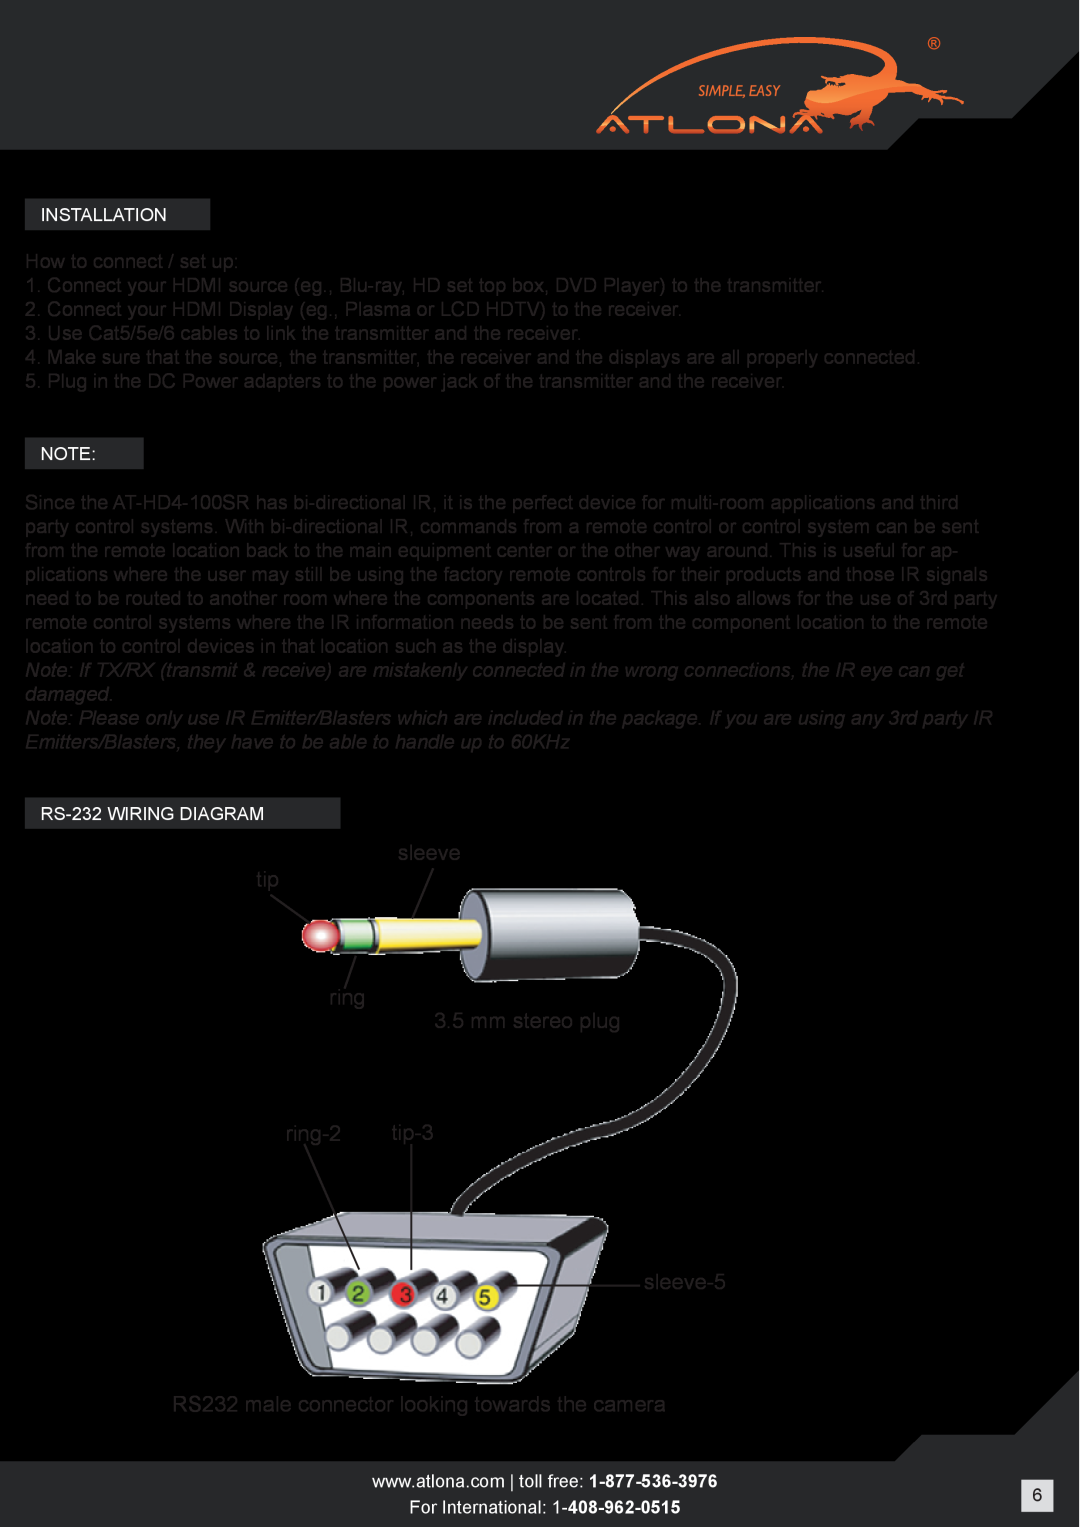 Atlona AT-HD4-100SR user manual sleeve tip ring 3.5 mm stereo plug ring-2 tip-3, sleeve-5 